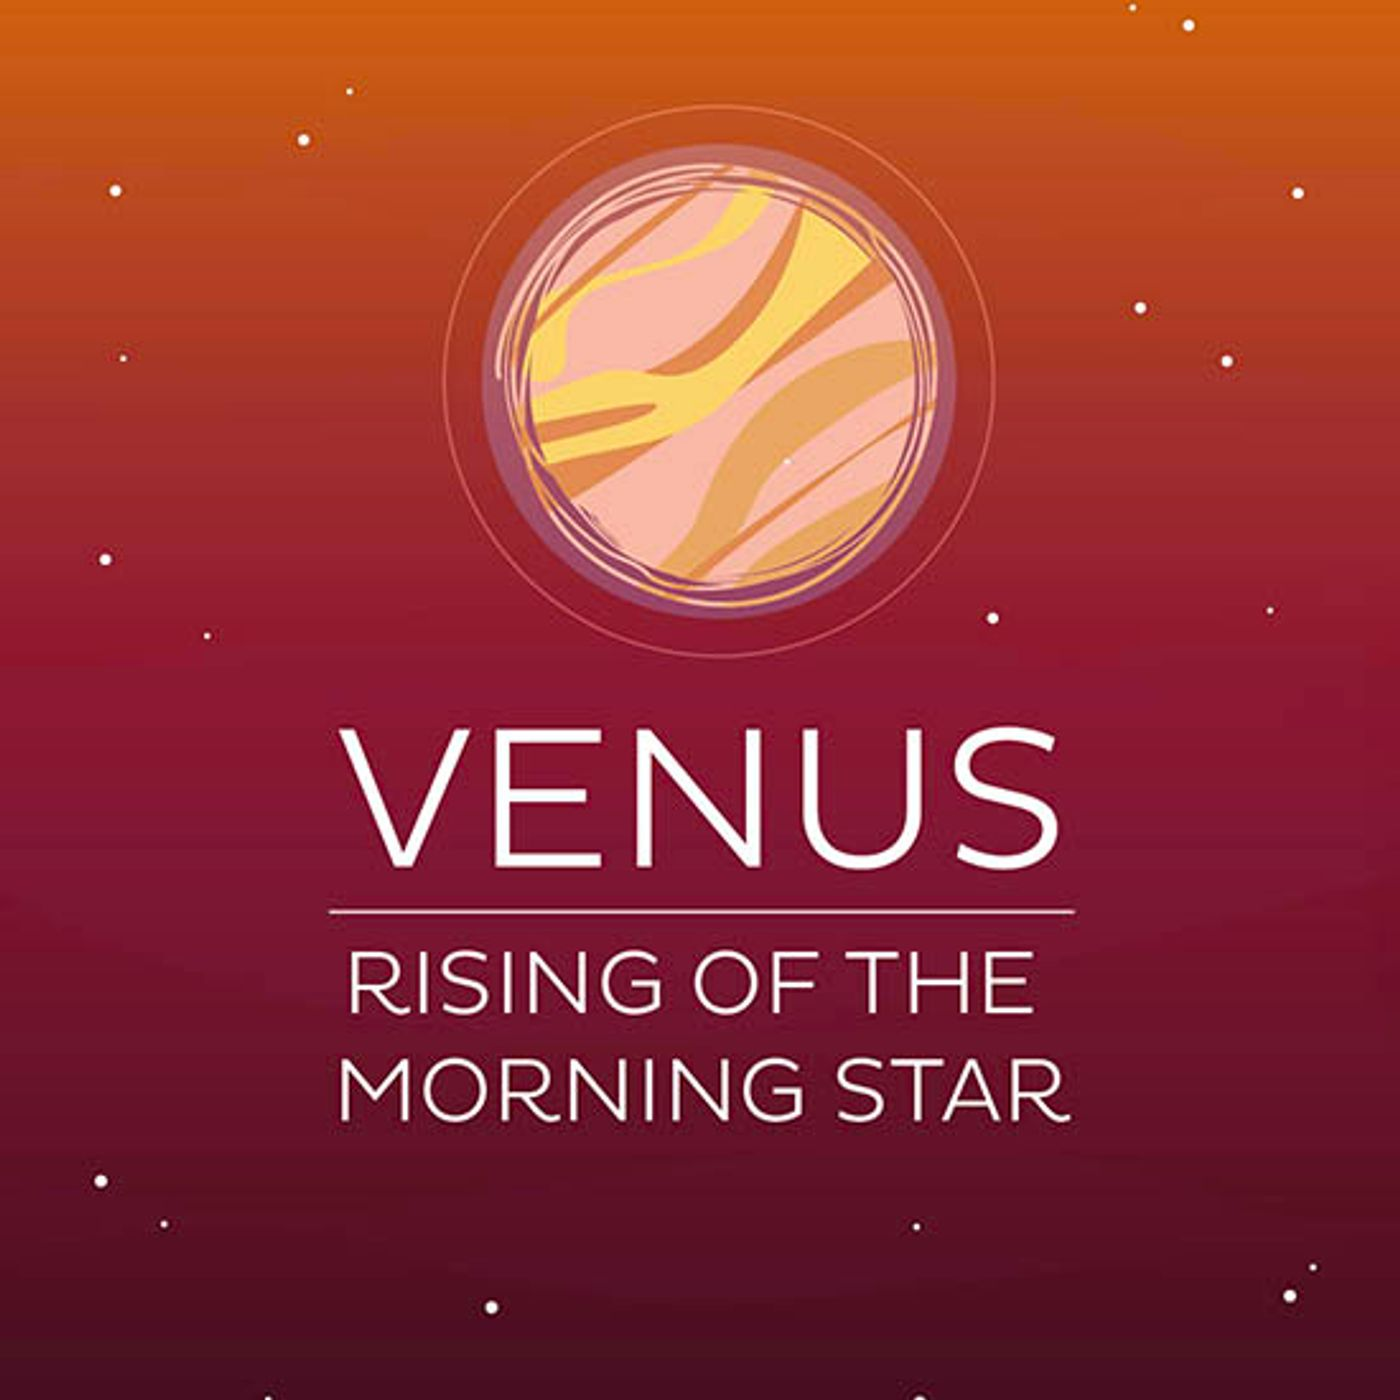 Venus: Rising of the Morning Star